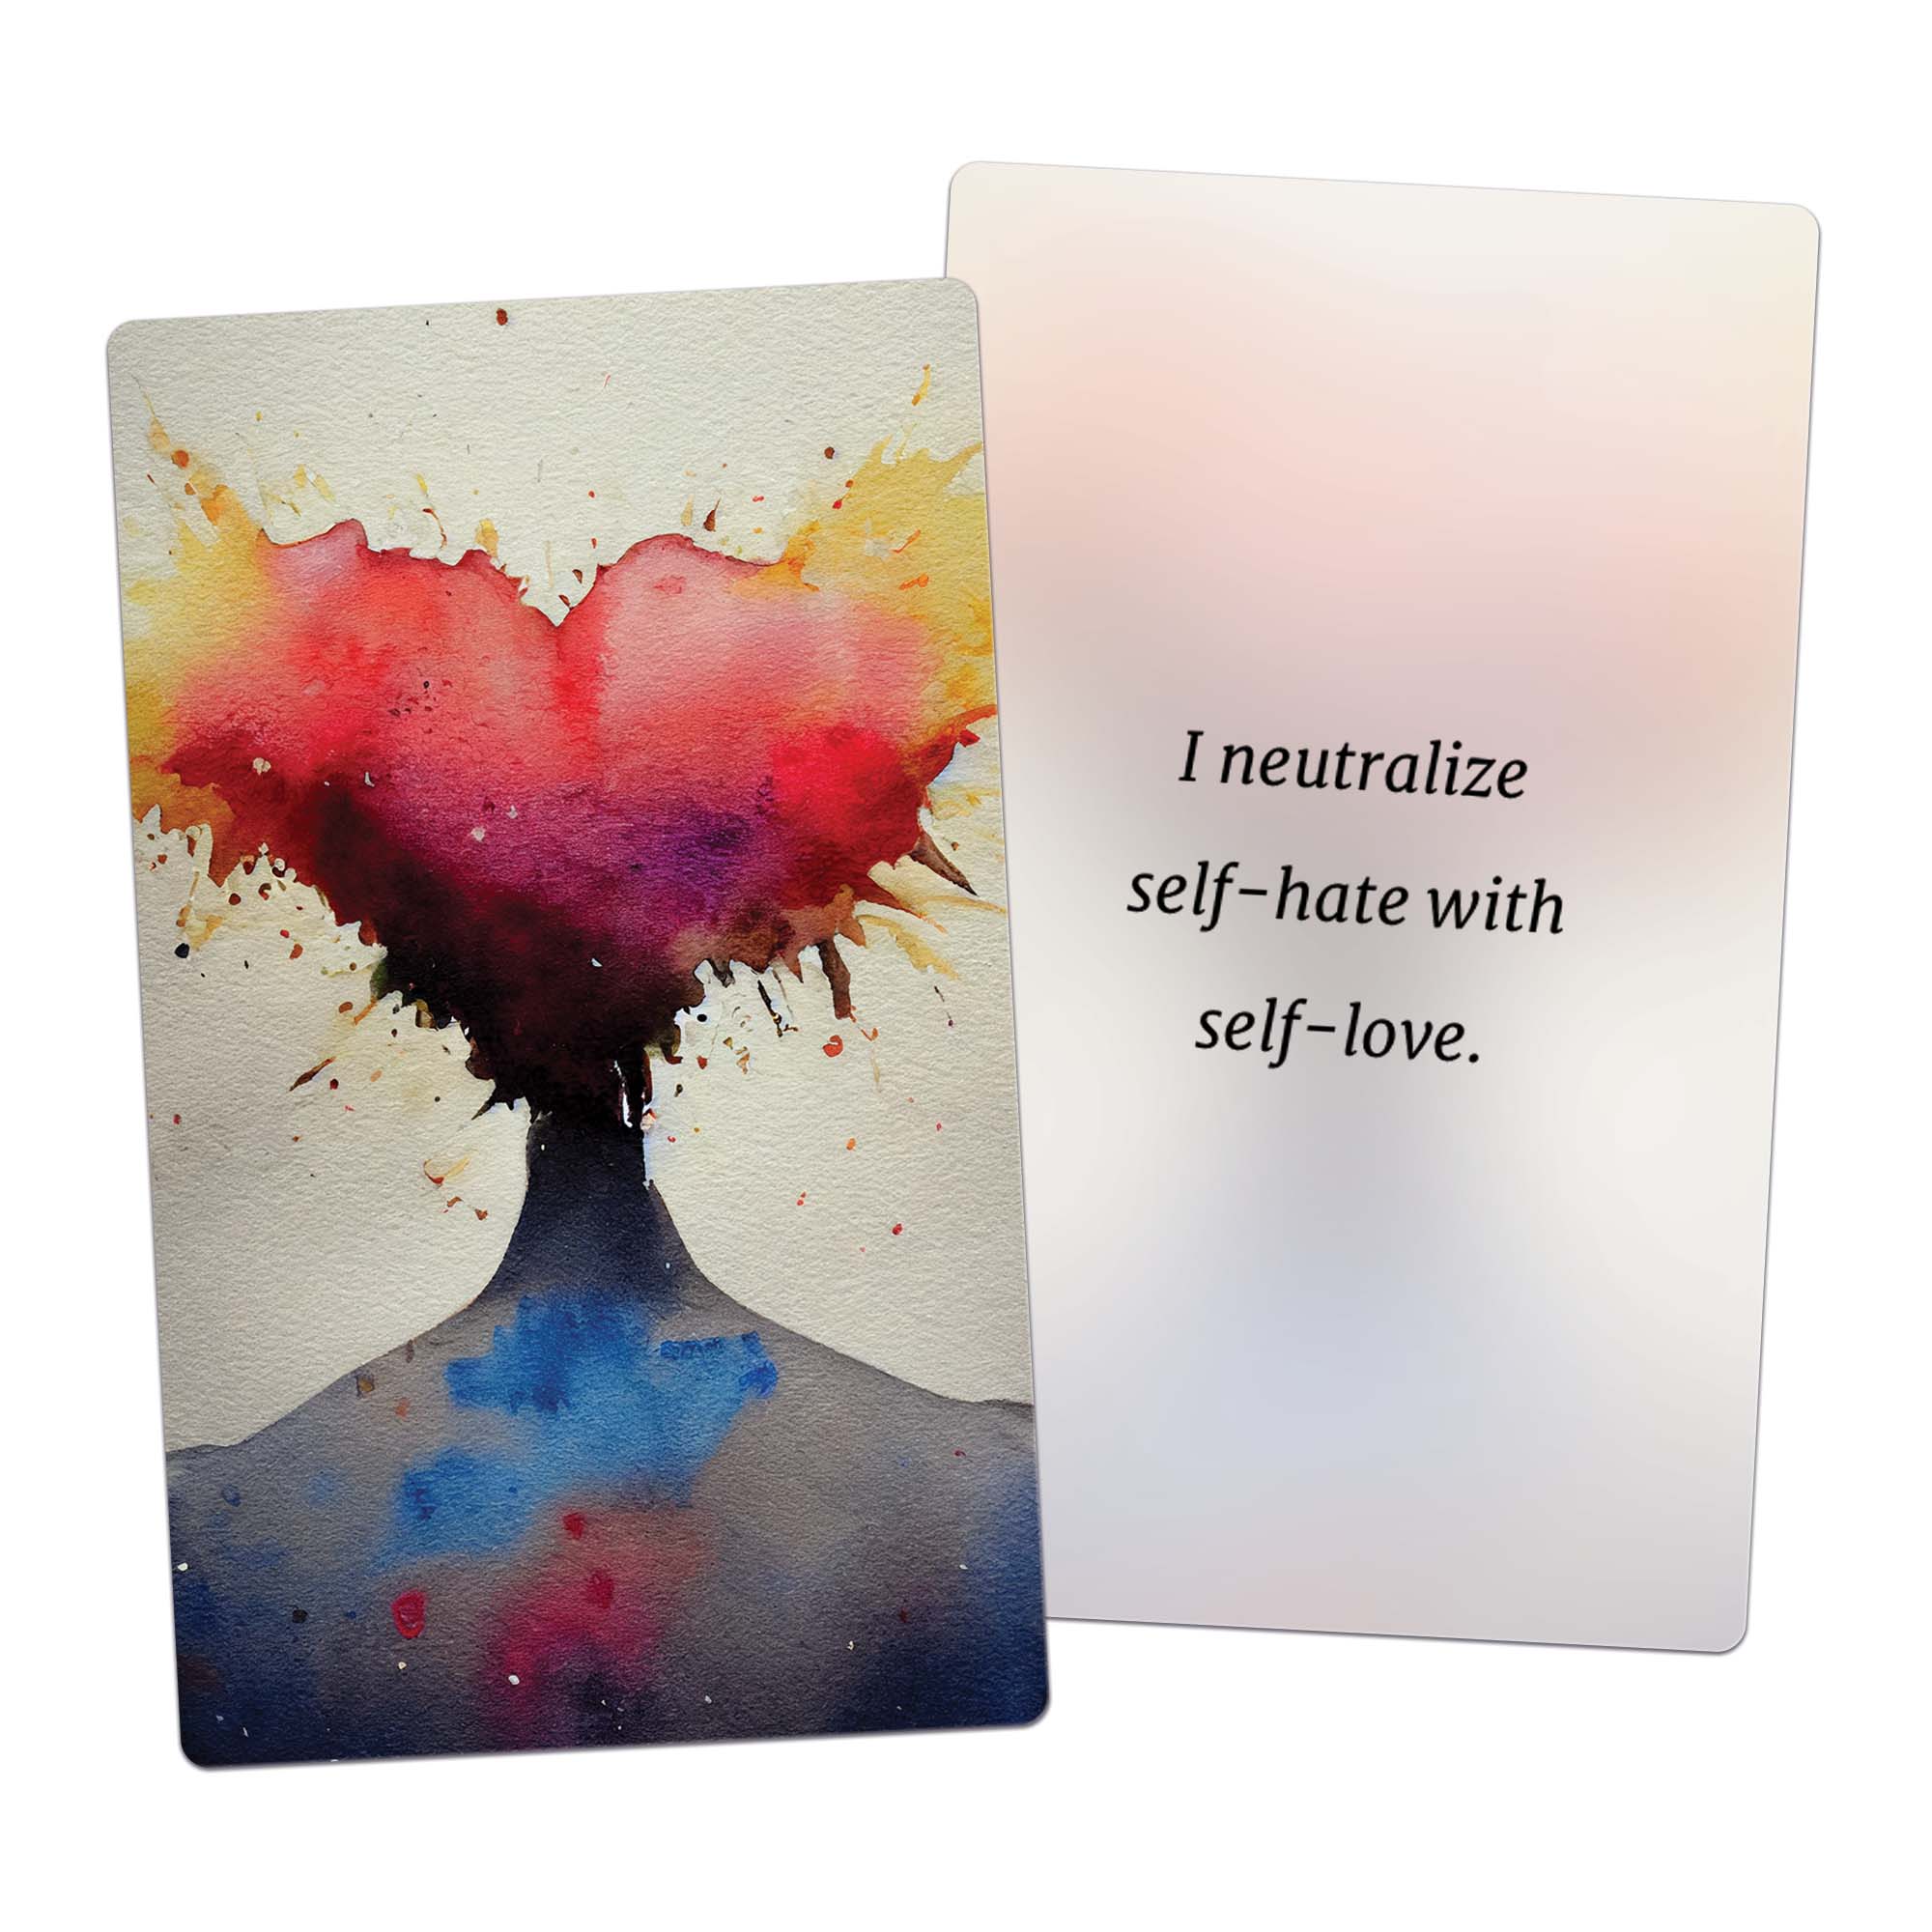 I neutralize self-hate with self-love.